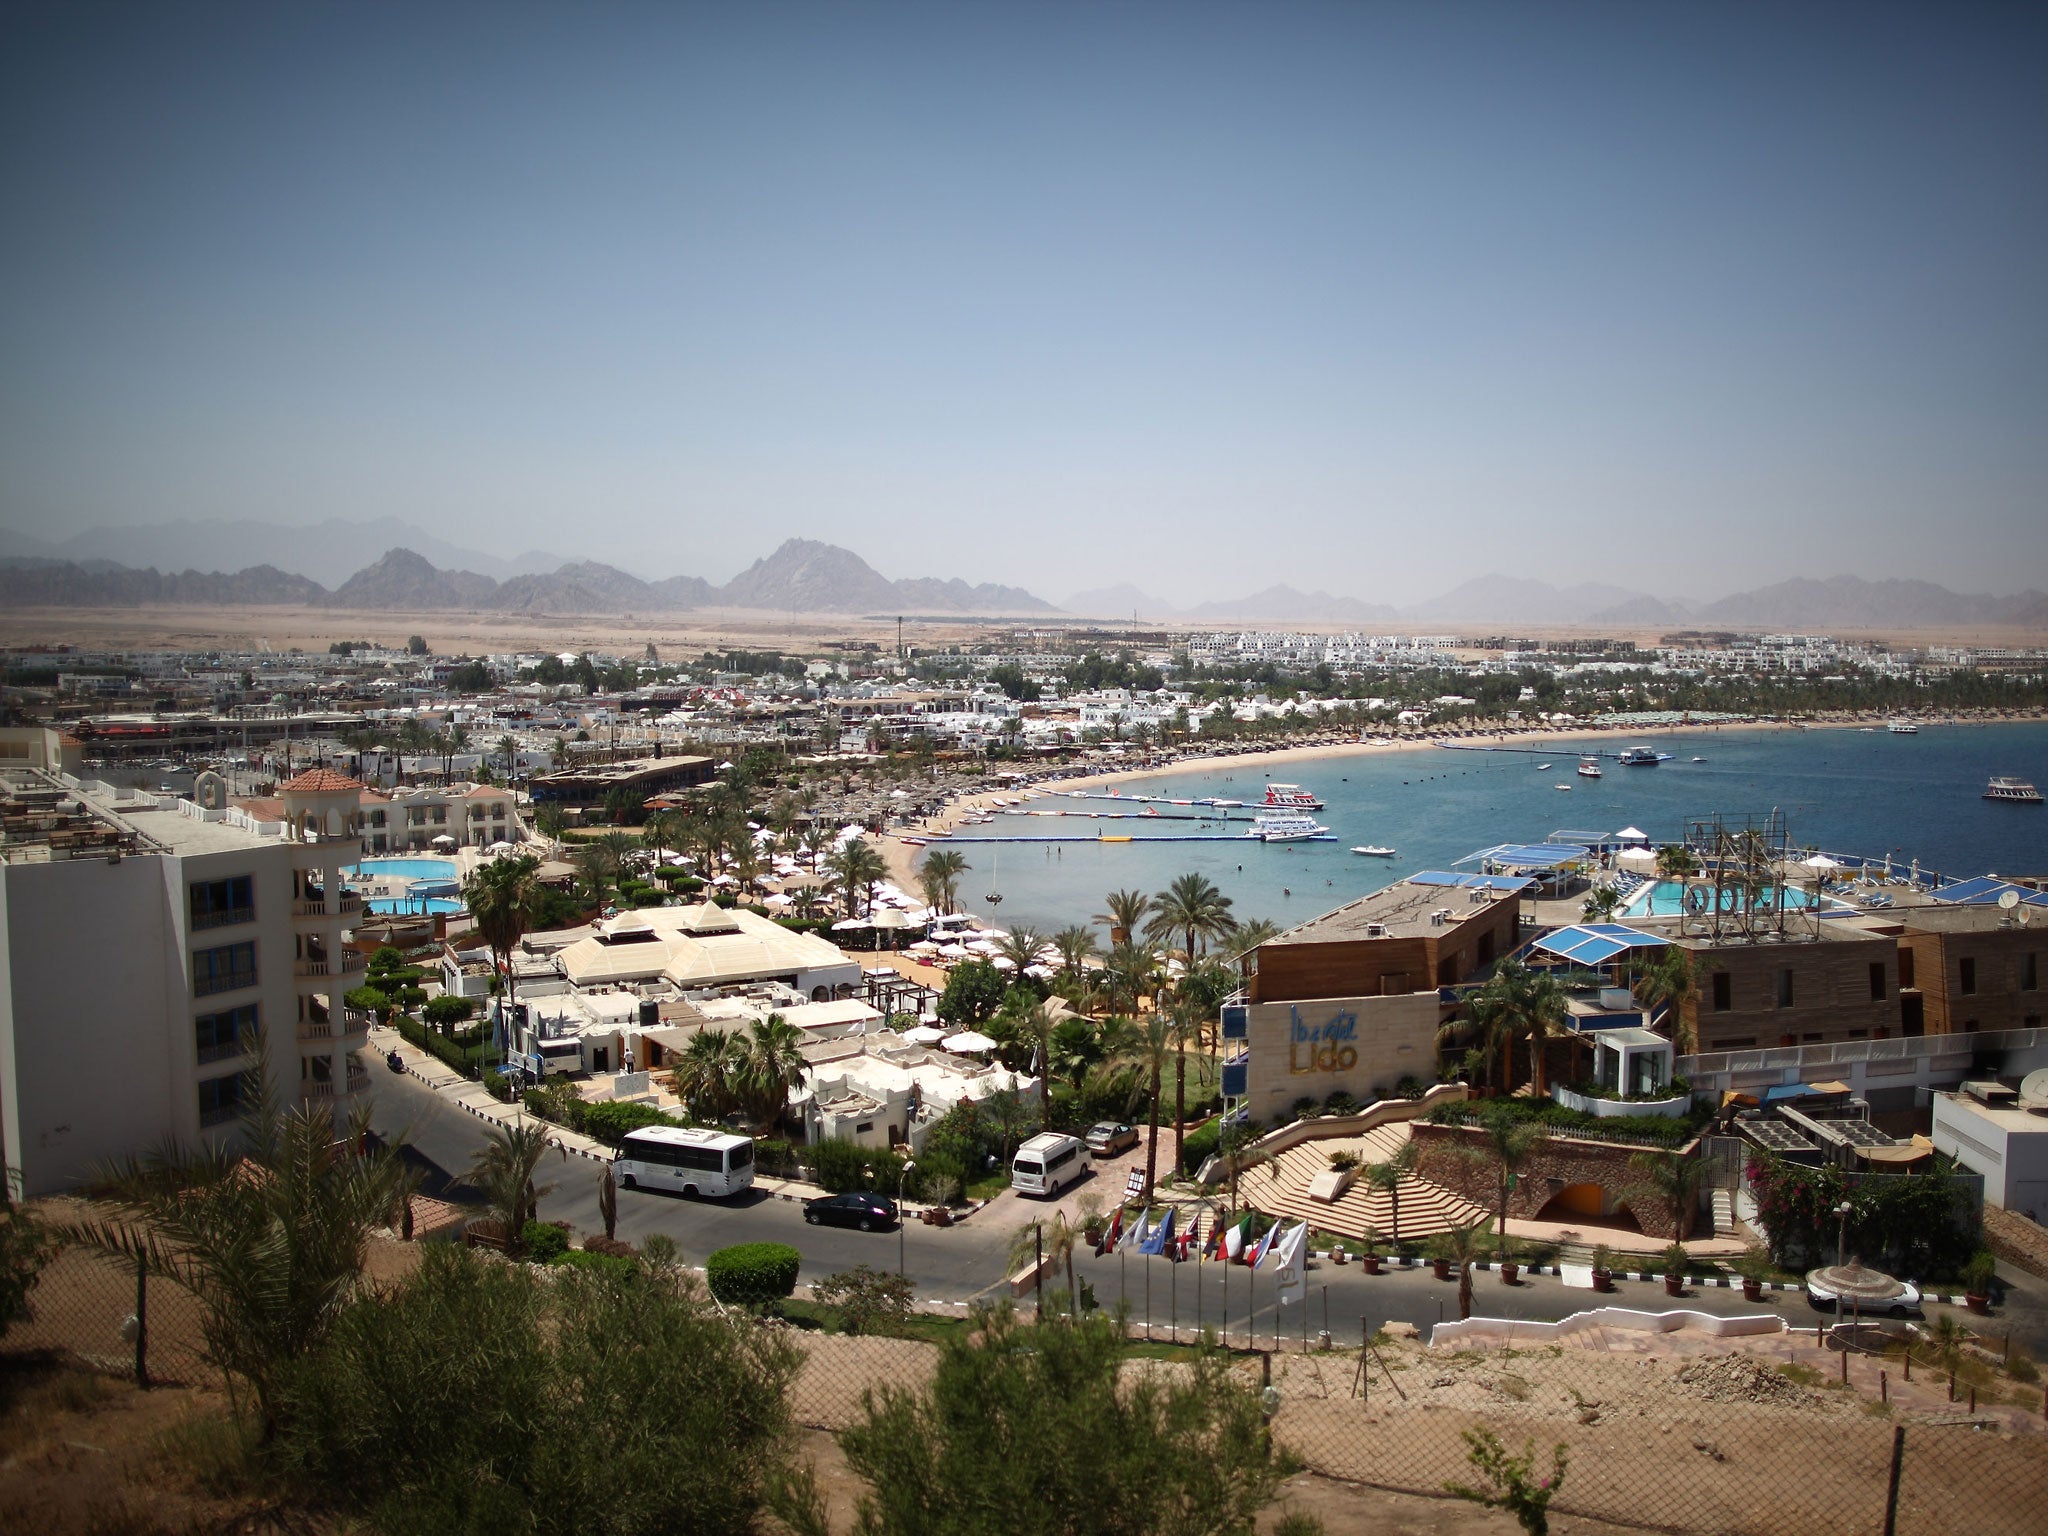 The popular Egyptian resort of Sharm el Sheikh